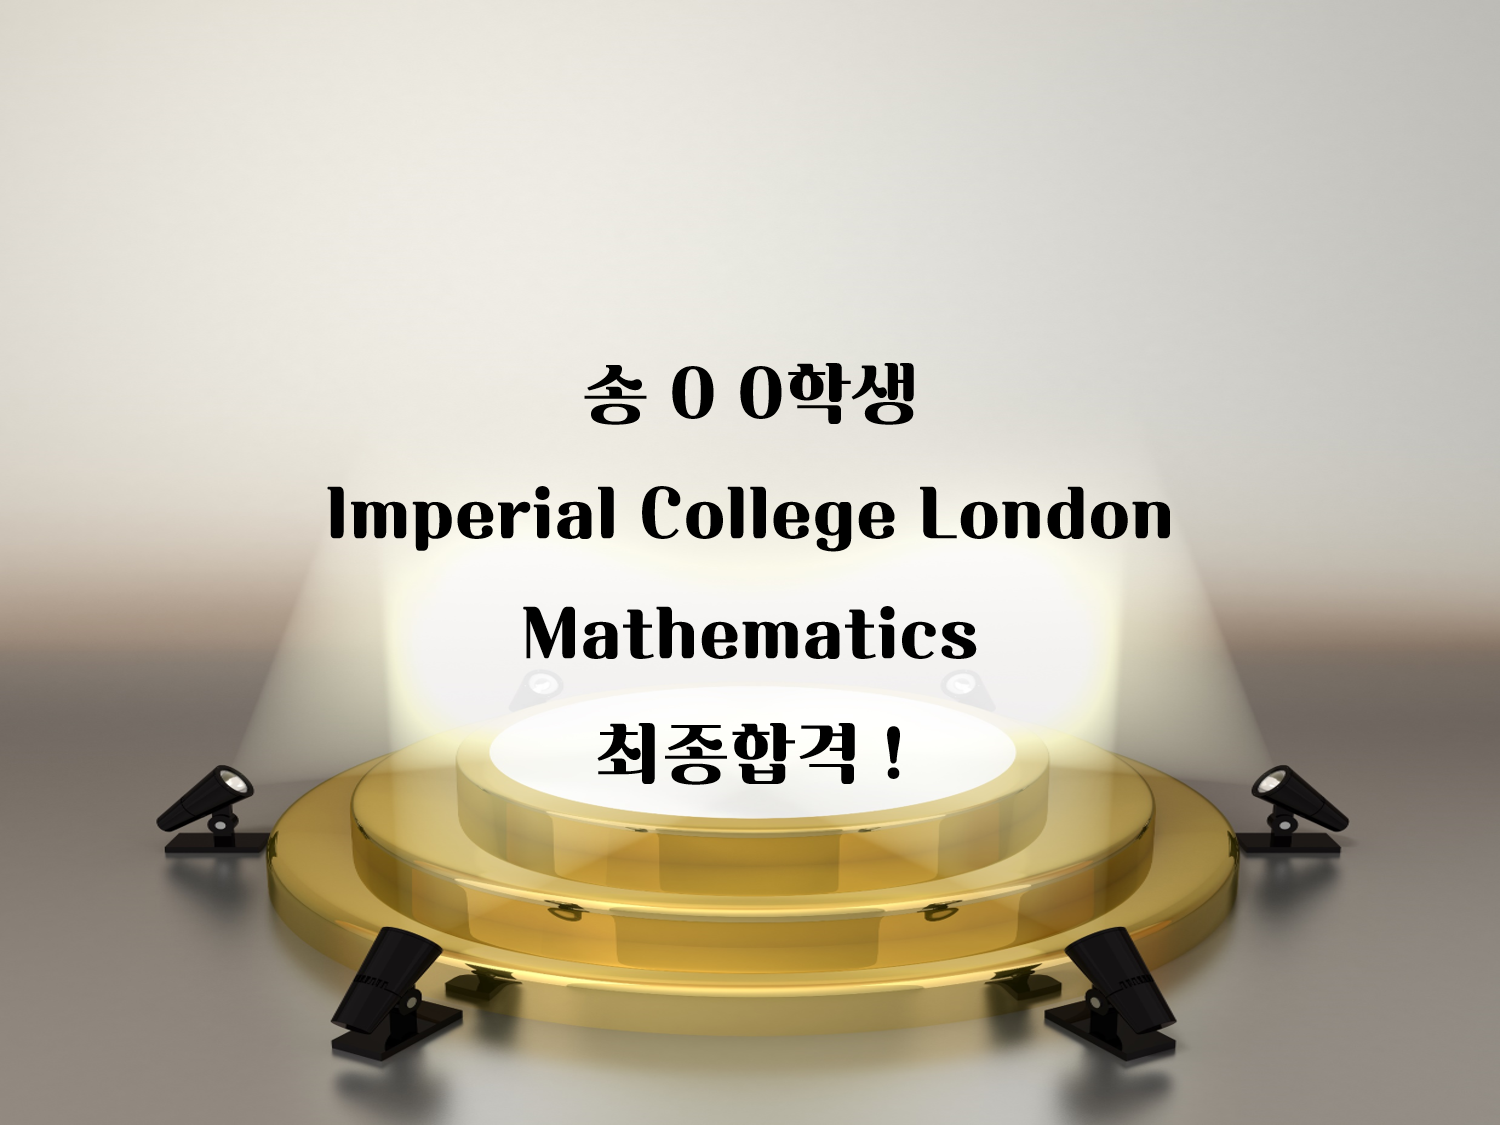 Imperial College London: Mathematics